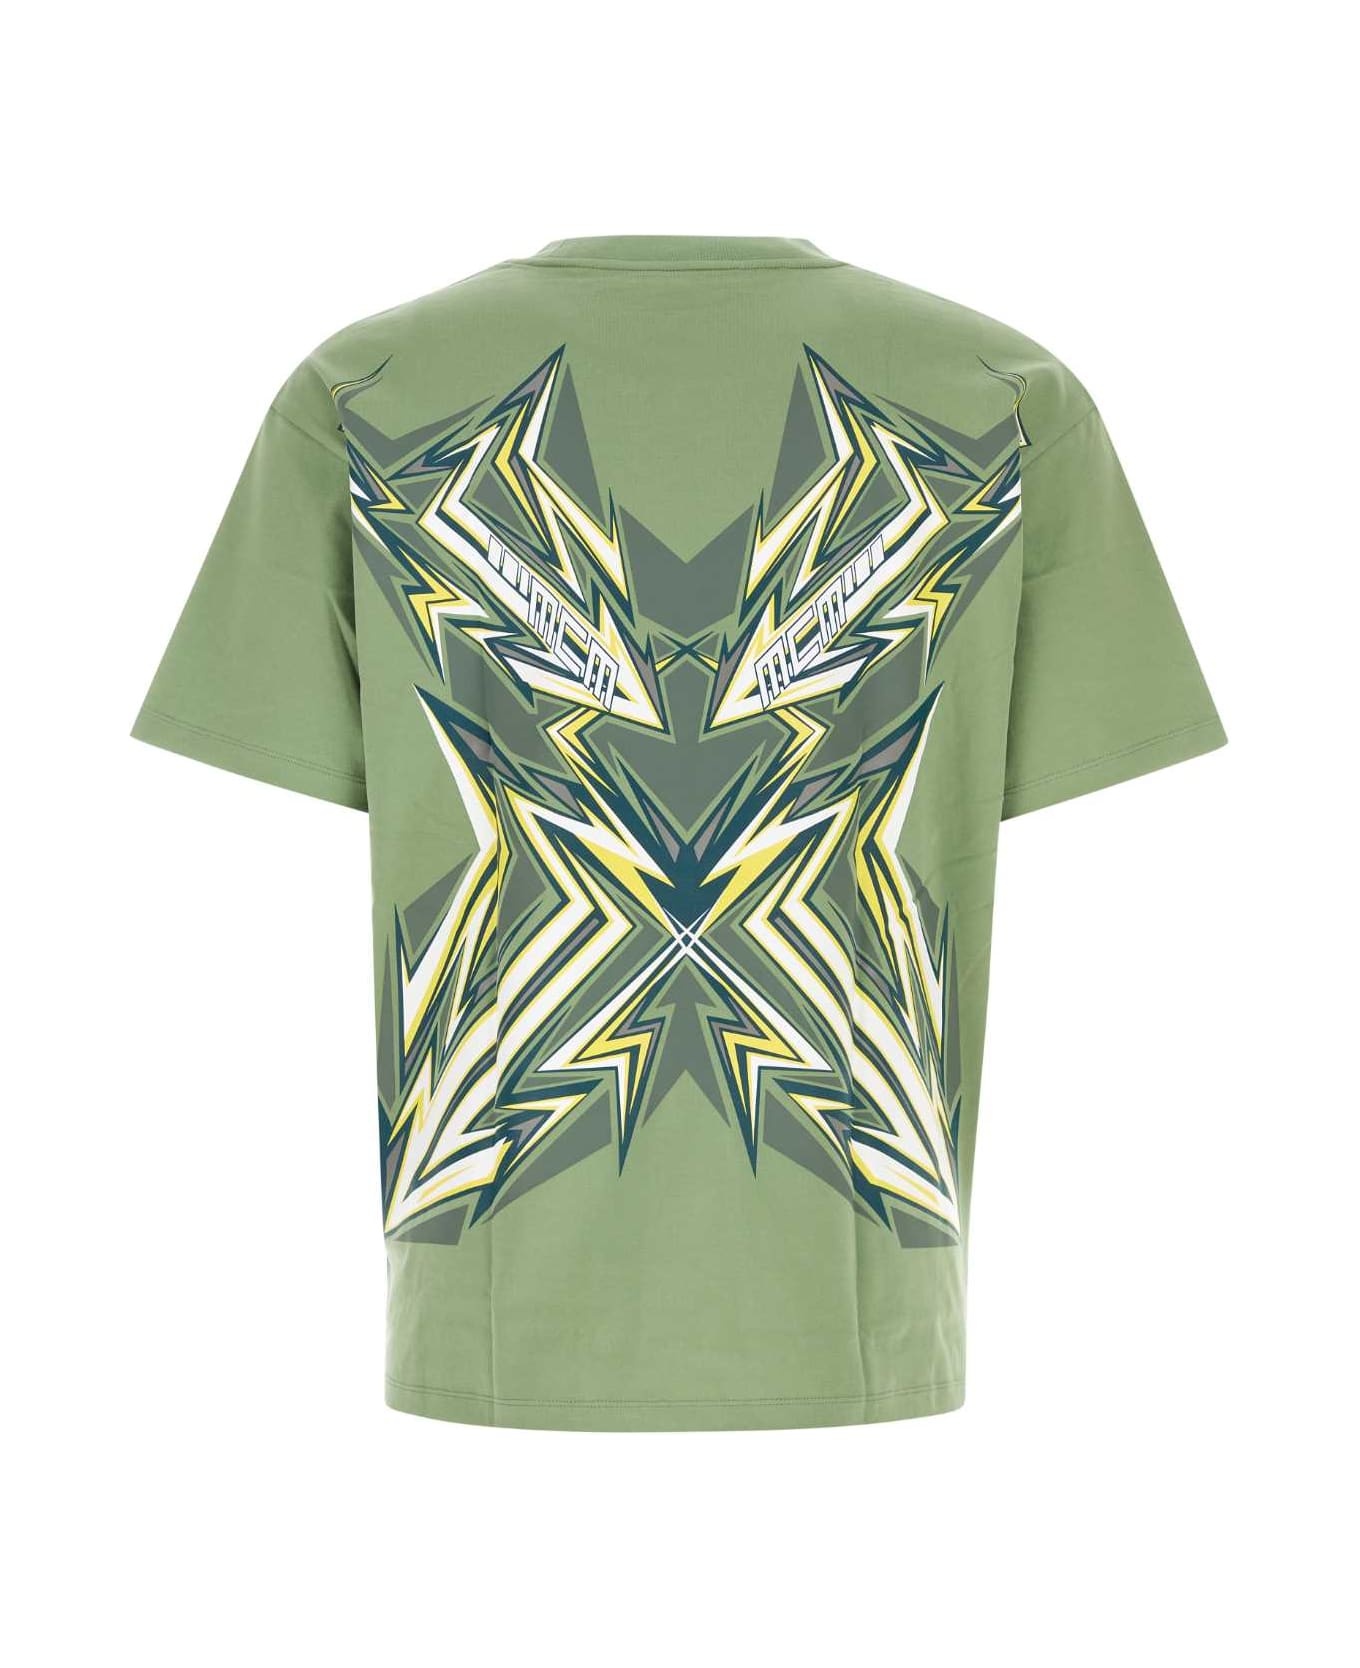 MCM Green Cotton Oversize T-shirt - JZ